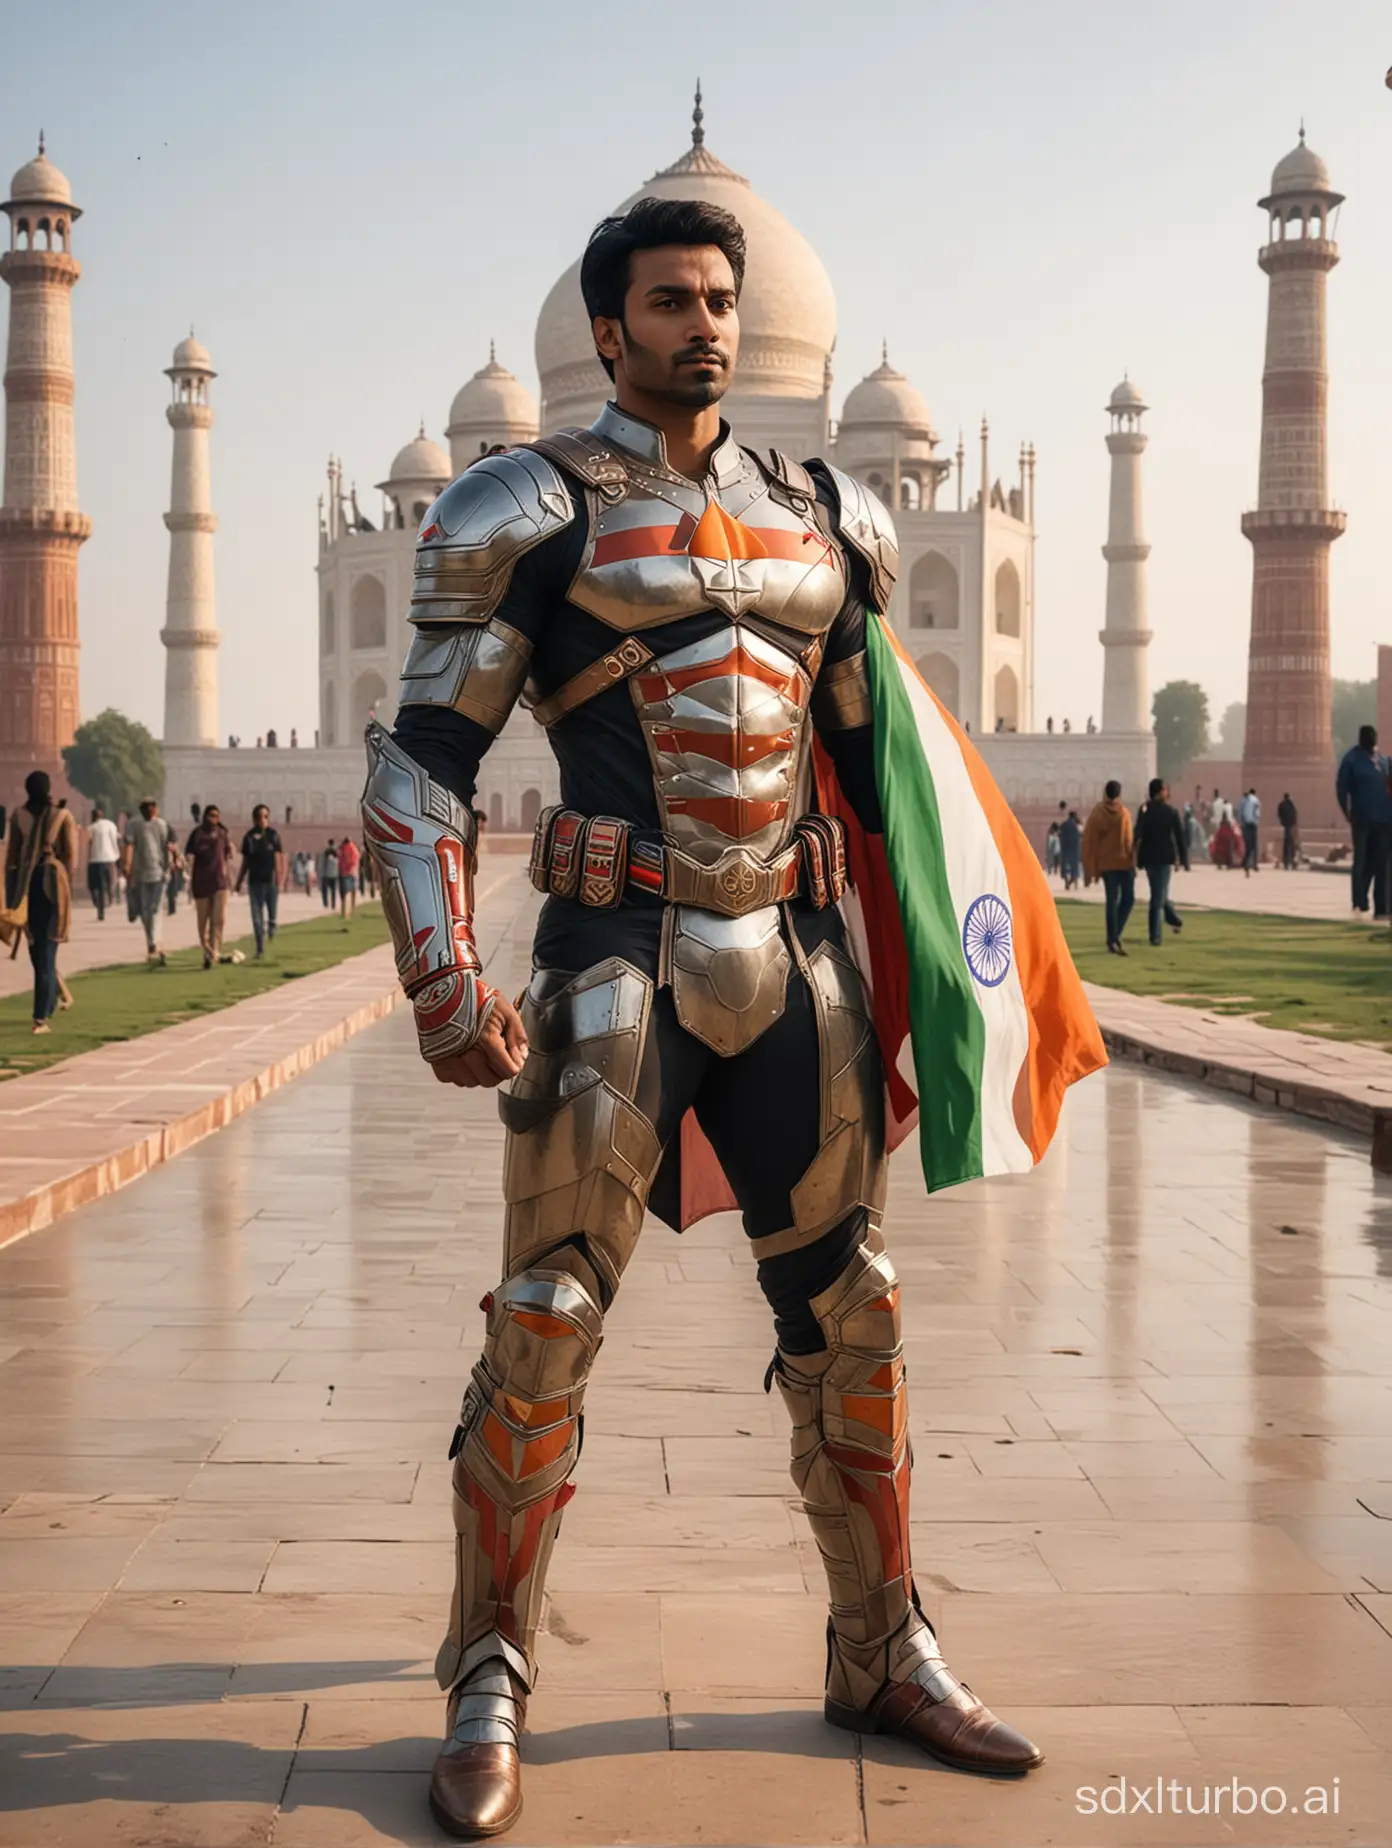 Indian-Superhero-in-Armor-Stands-Proud-by-Taj-Mahal